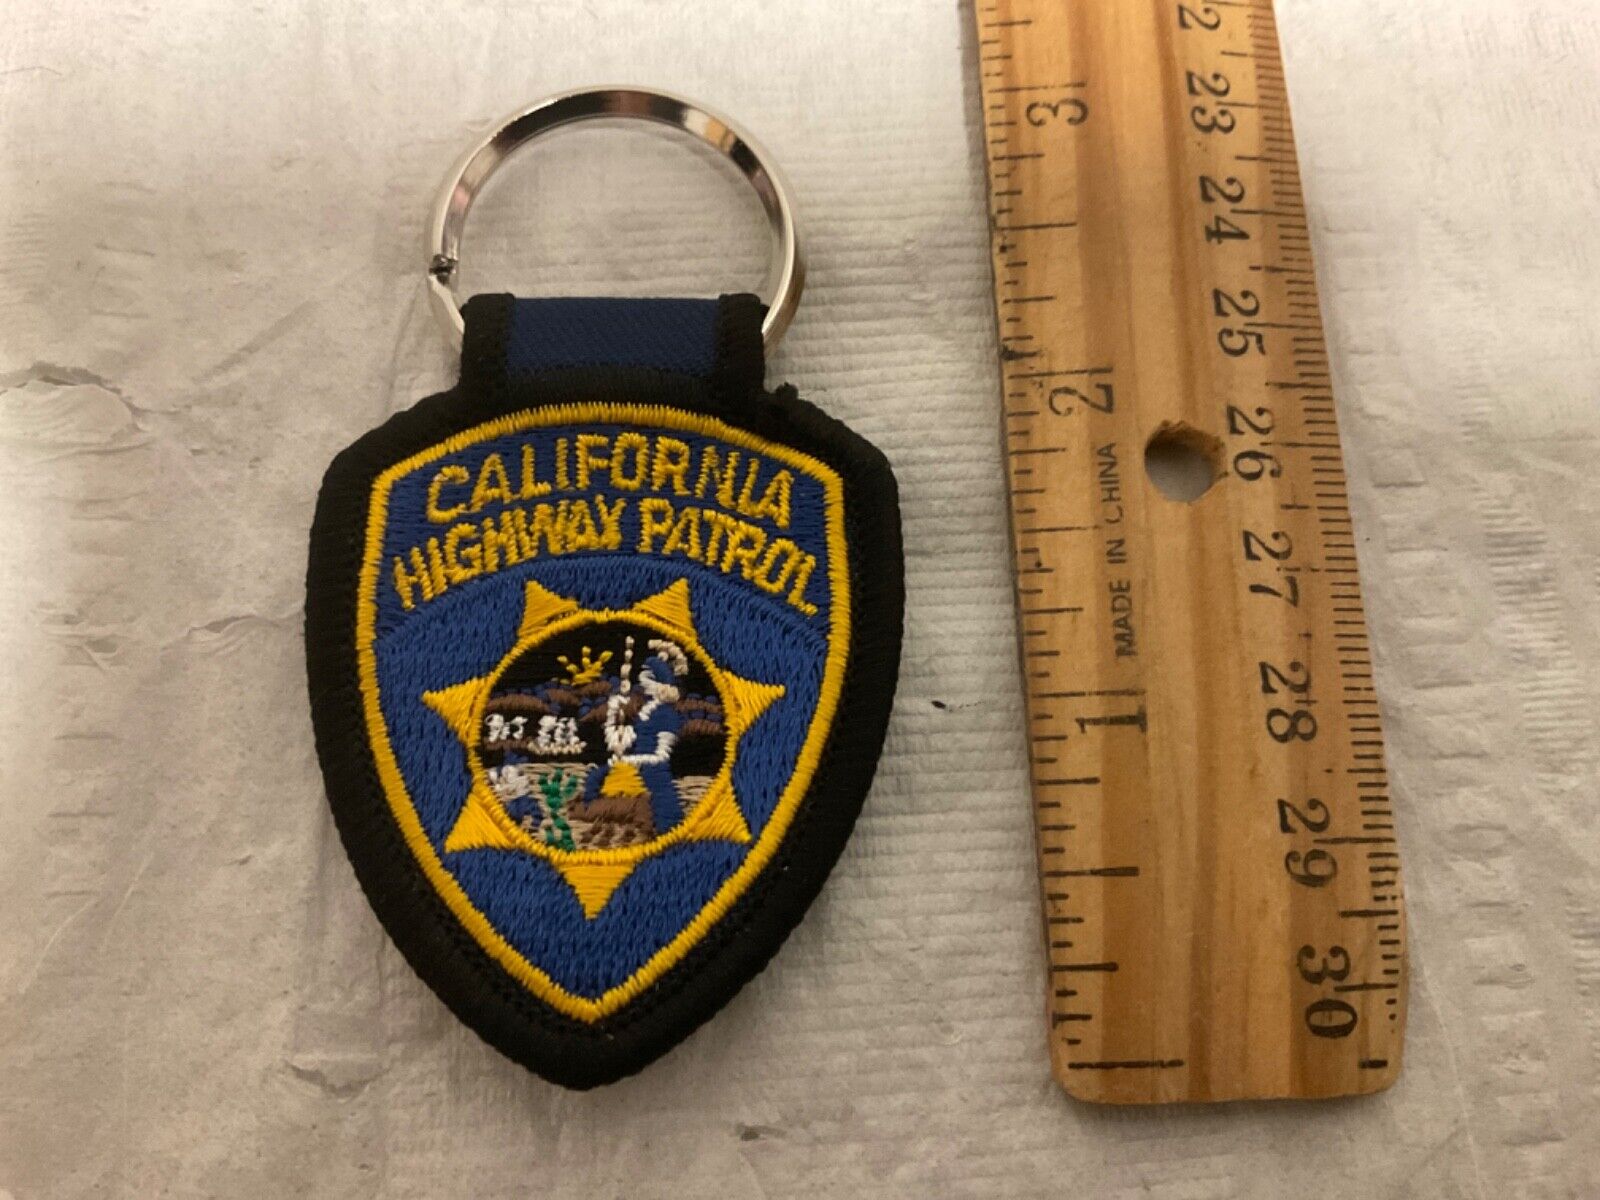 California Highway Patrol Patch key chain.